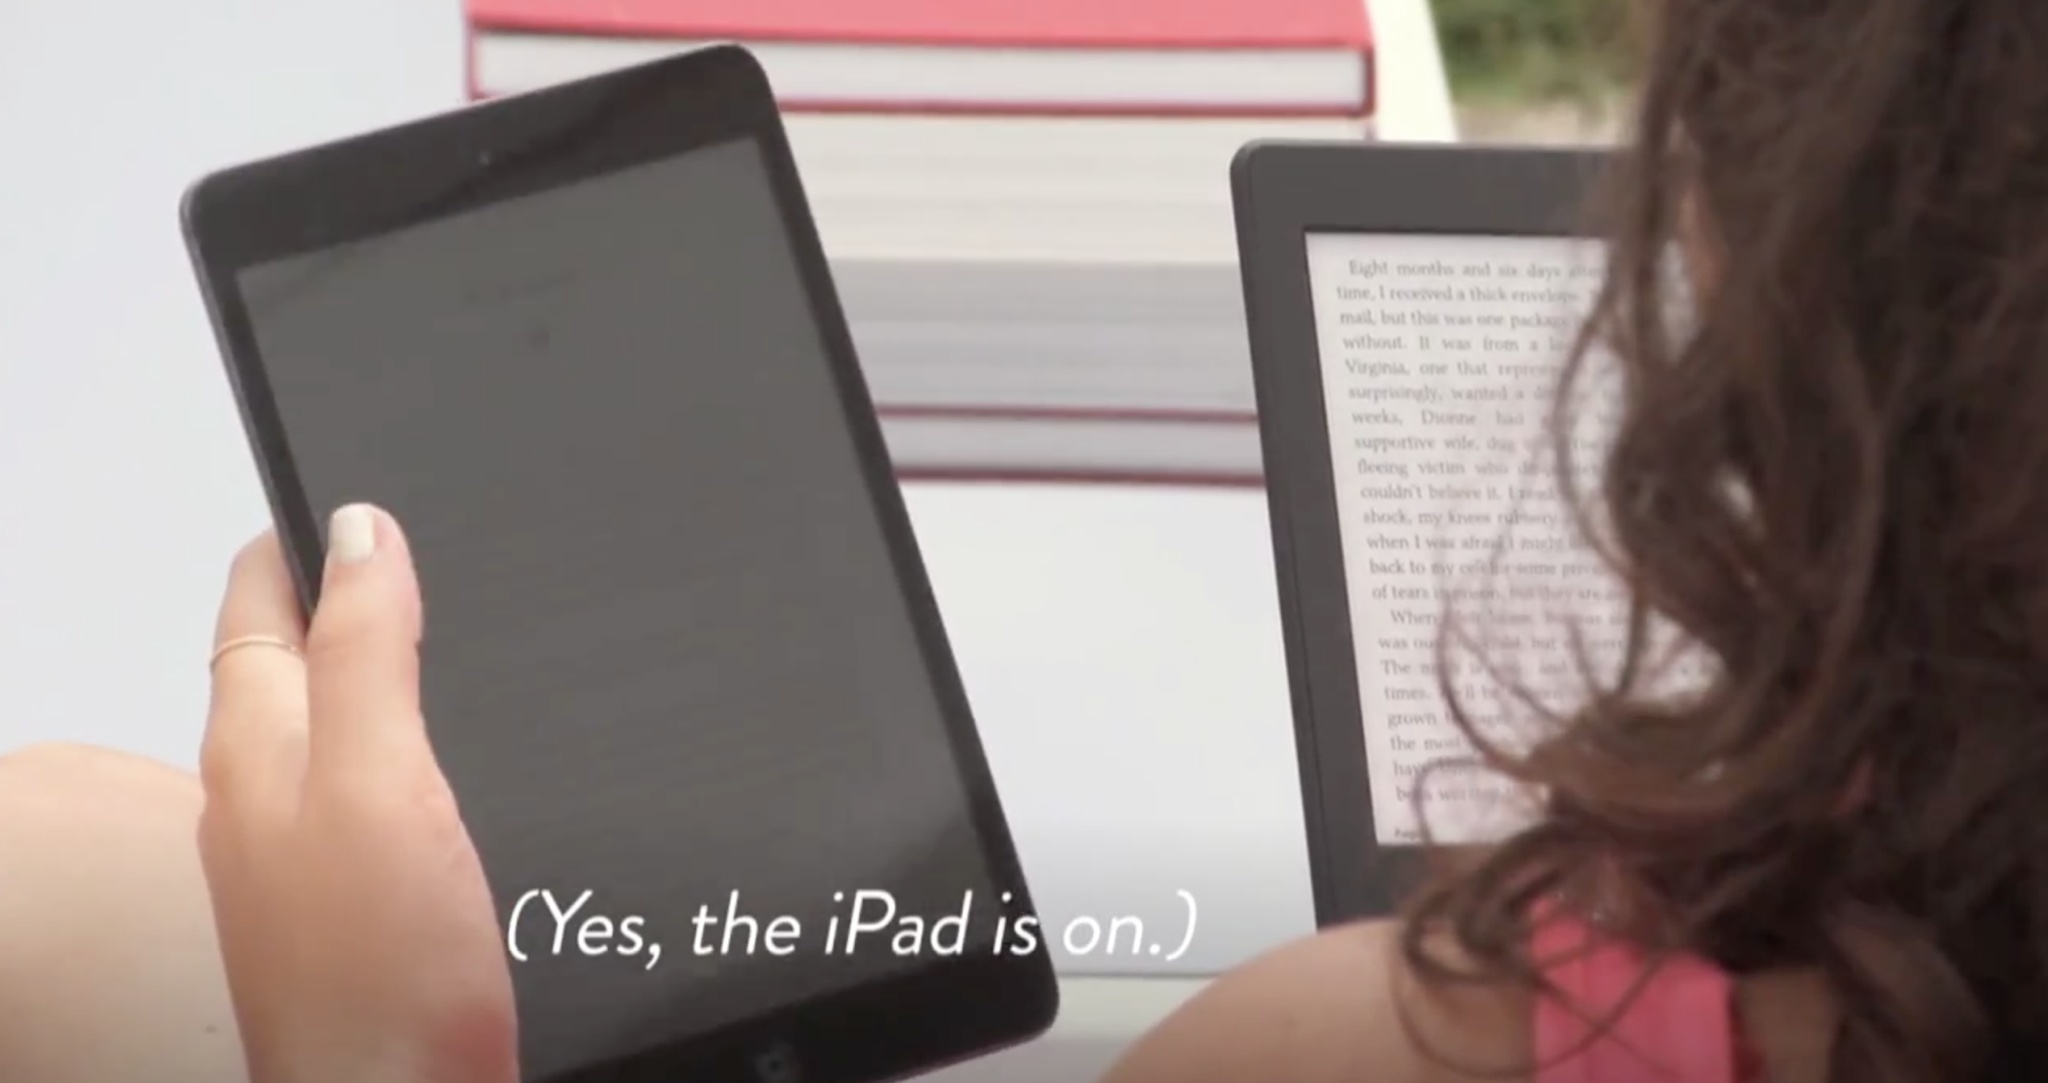 Amazon 2013 Kindle Paperwhtite ad (Yes the iPad is on, image 001)